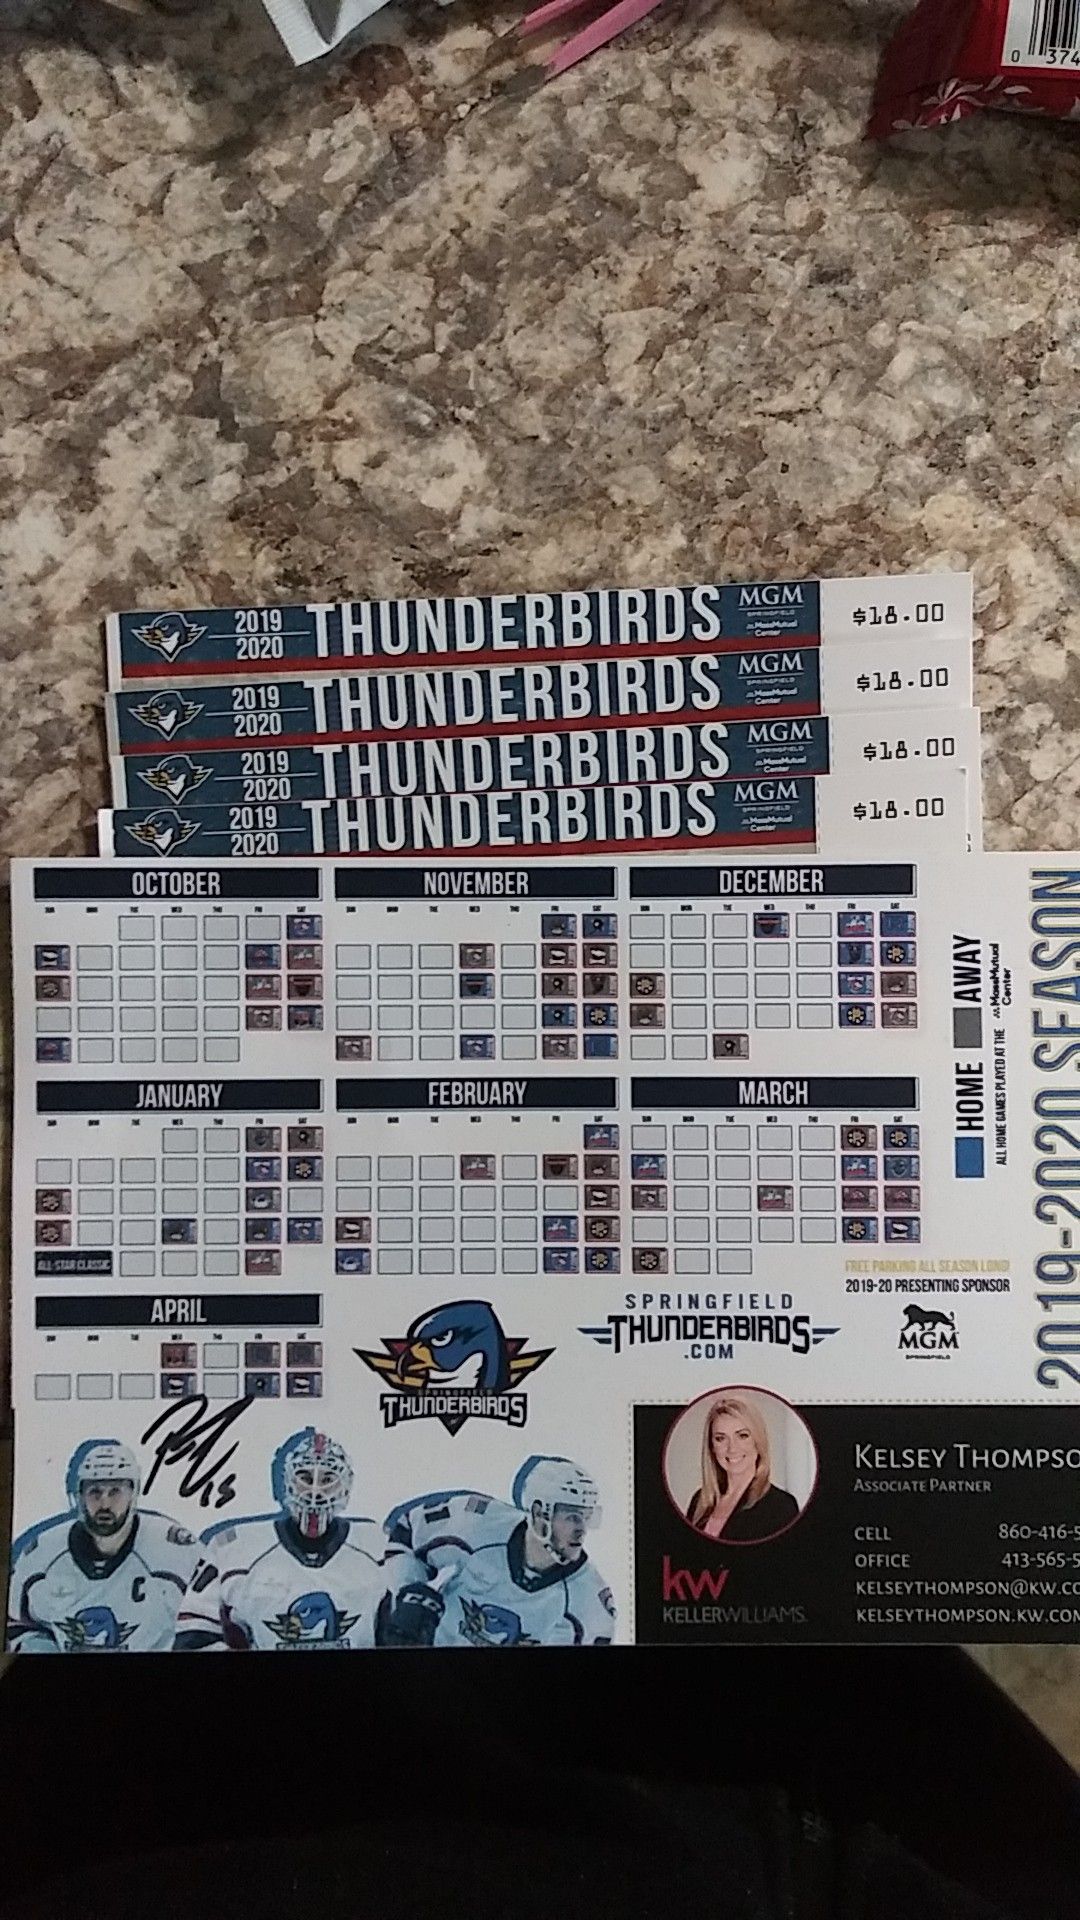 Thunderbirds ticket